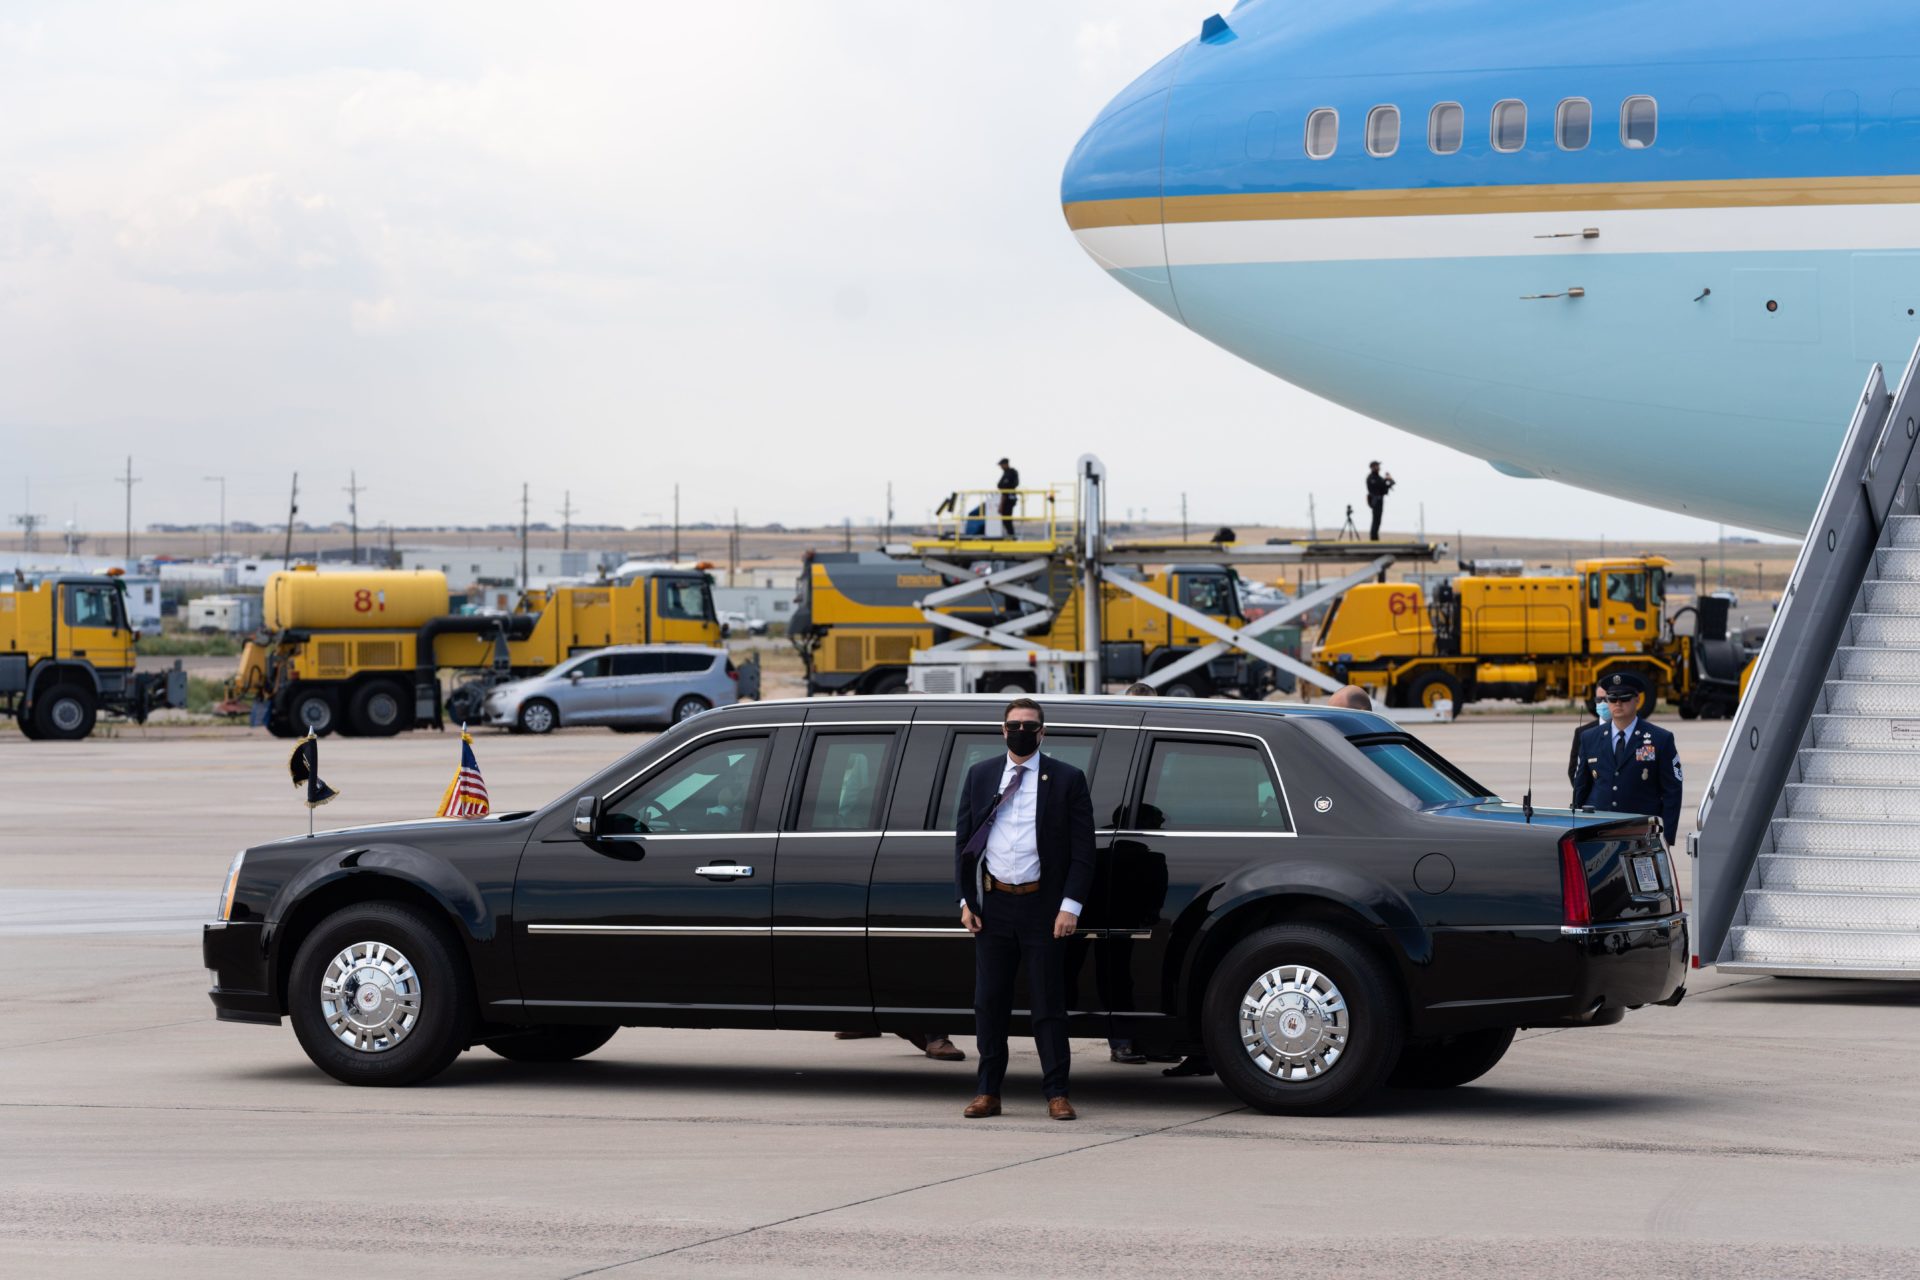 US President Joe Biden's limo in front of Air Force One at Denver International Airport in Denver, Colorado in September 2021